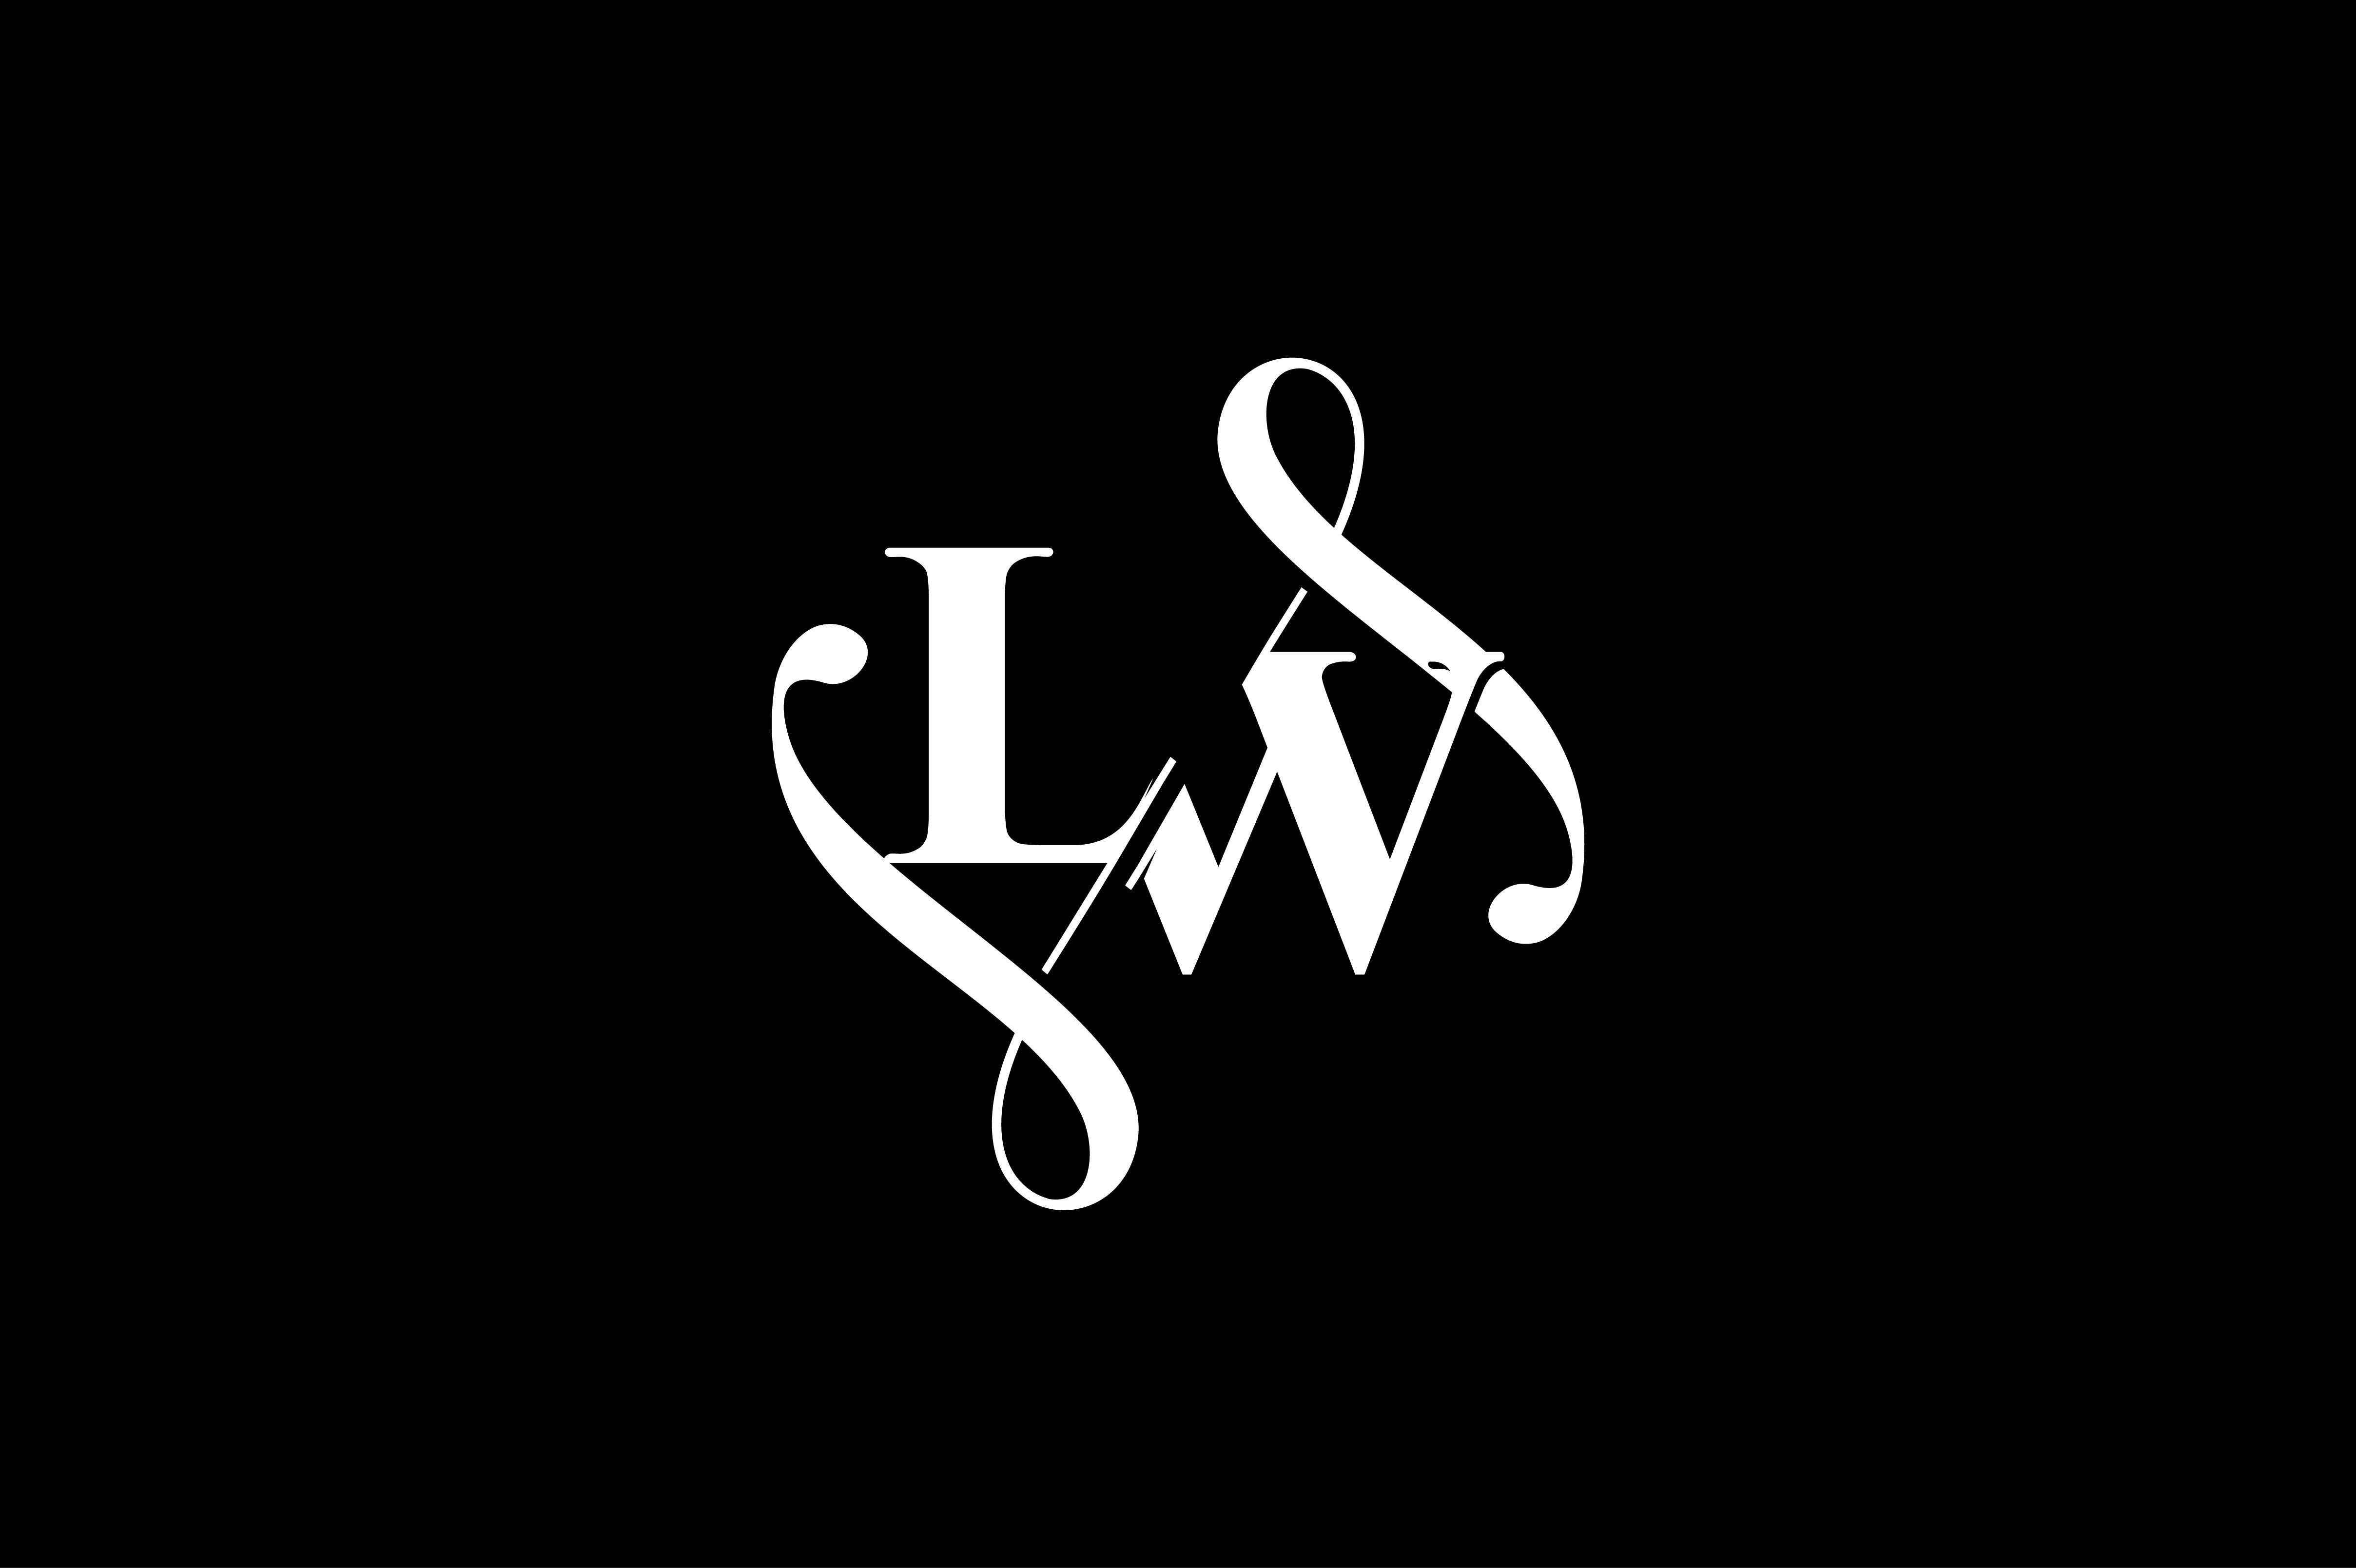 LW Monogram logo Design V6 By Vectorseller | TheHungryJPEG